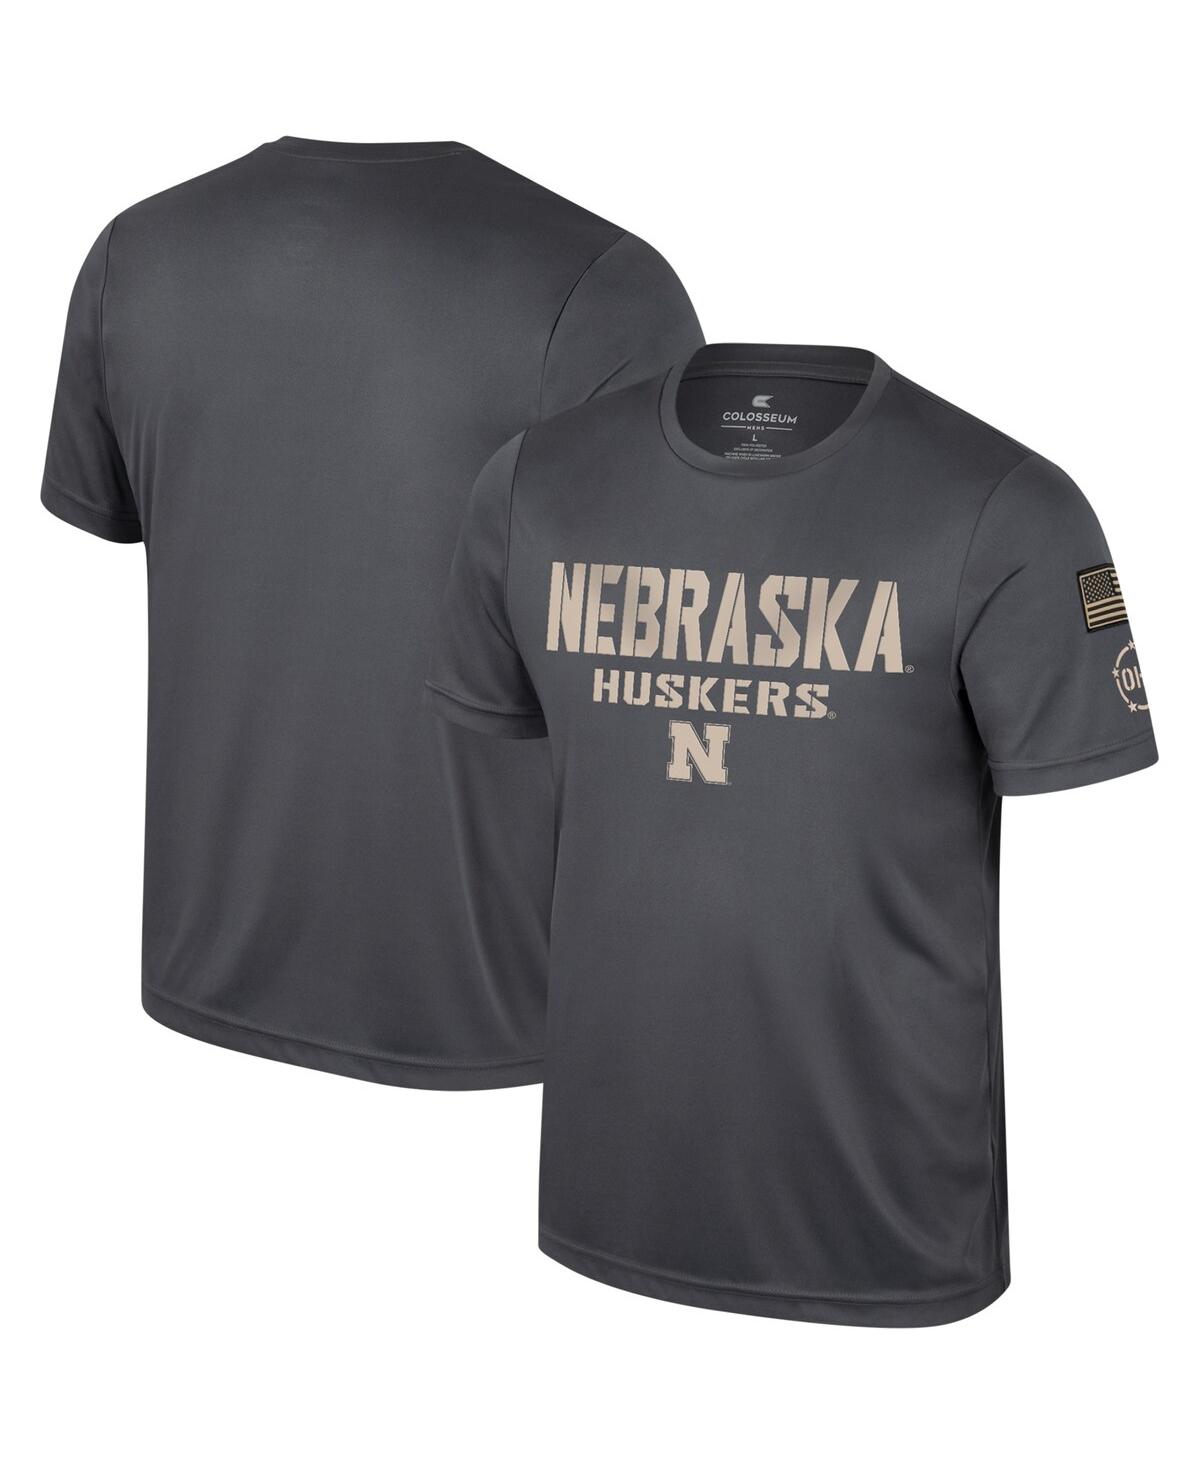 Men's Colosseum Charcoal Nebraska Huskers Oht Military-Inspired Appreciation T-shirt - Charcoal